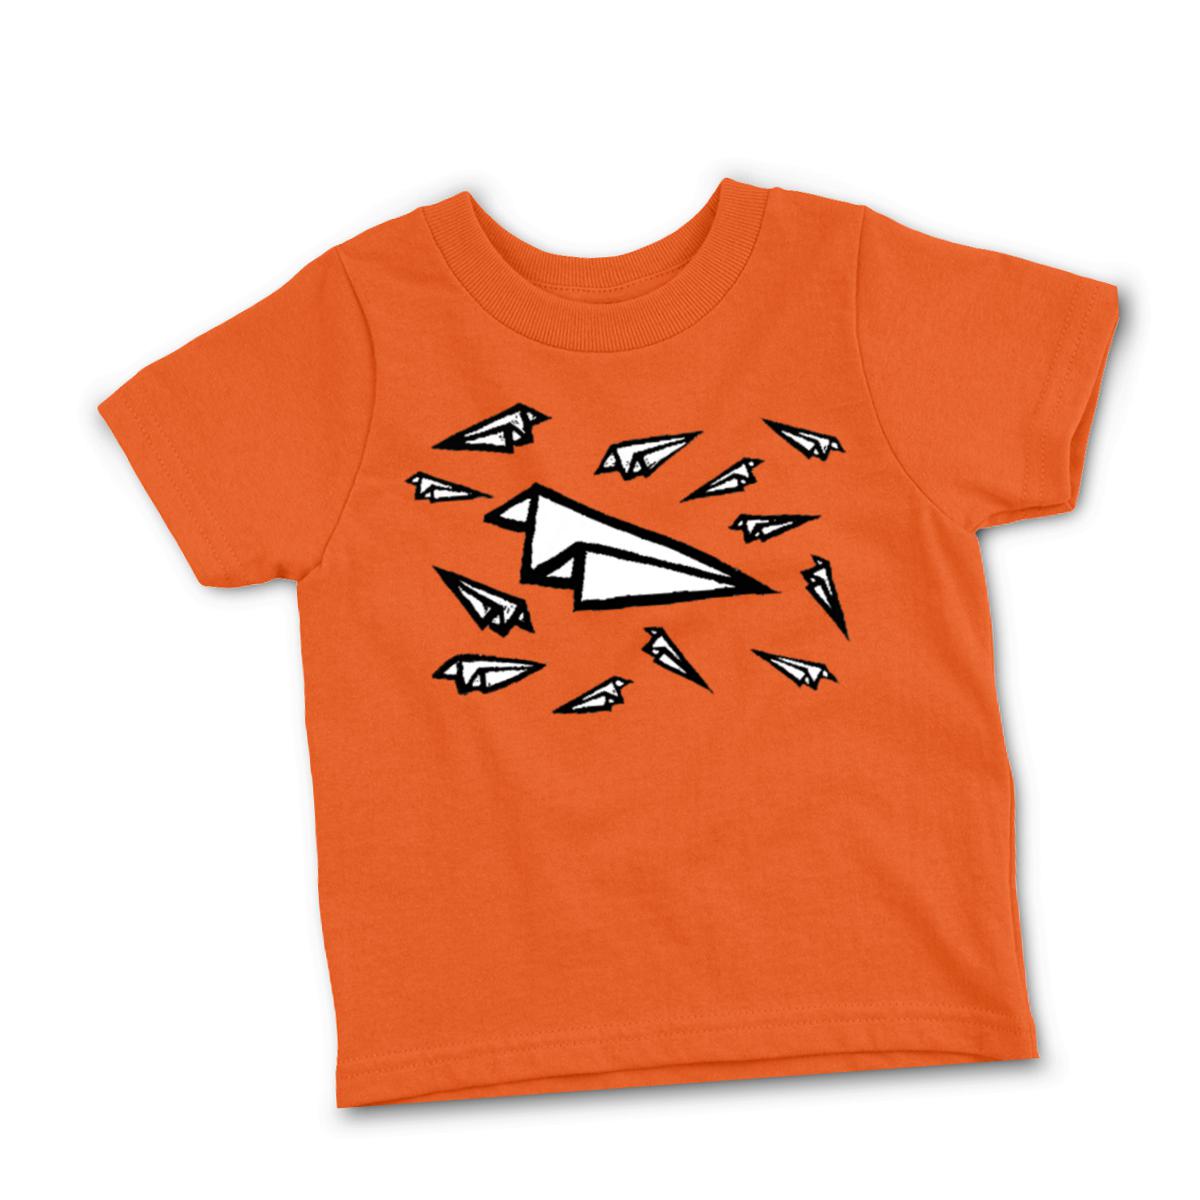 Airplane Frenzy Toddler Tee 4T orange